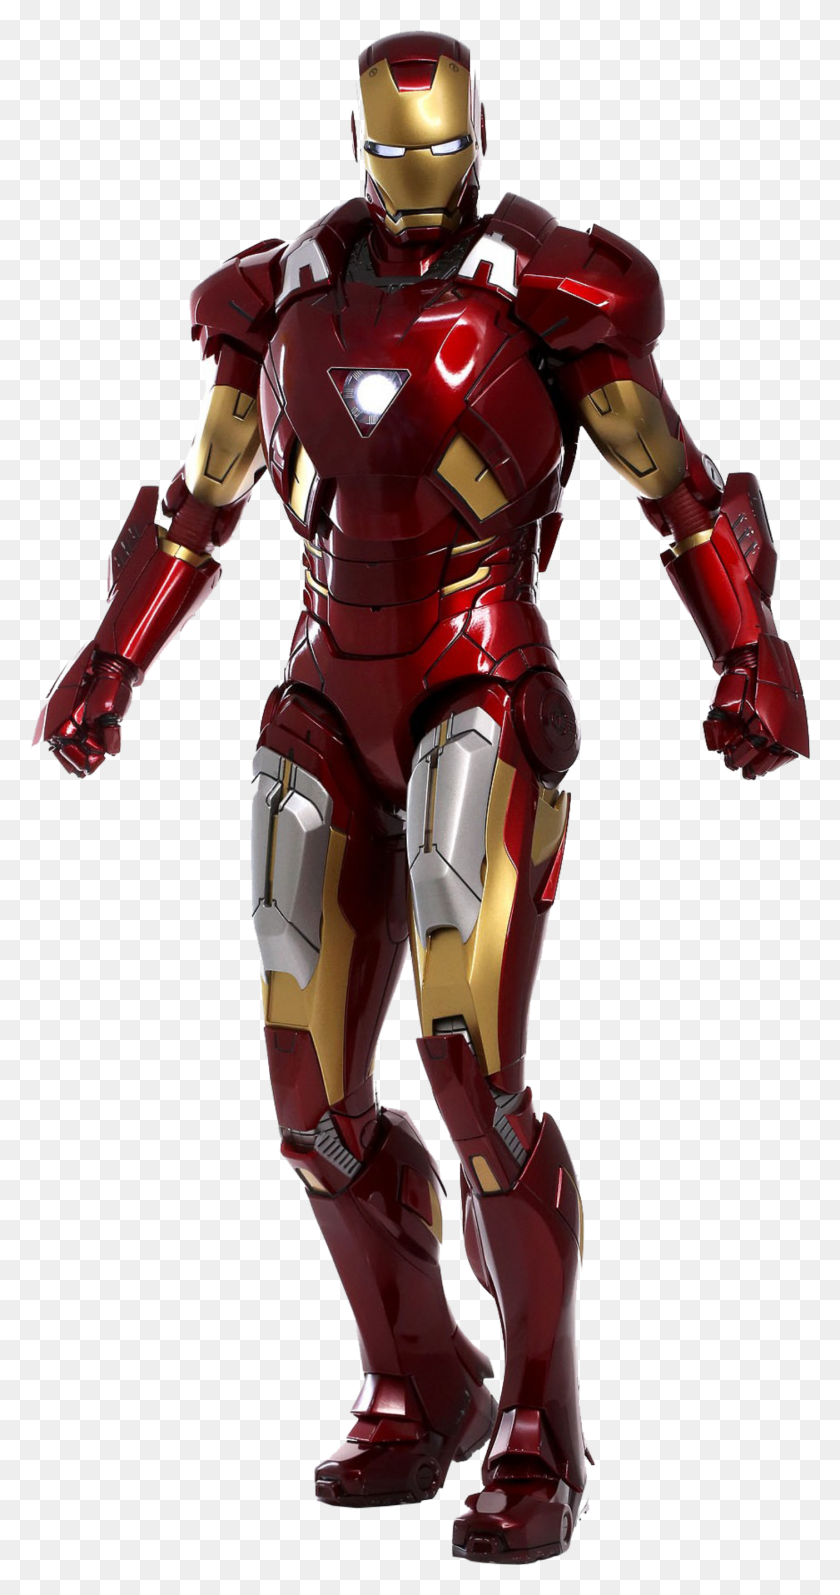 1403x2762 Ironman Tony Stark Png Image - Tony Stark PNG